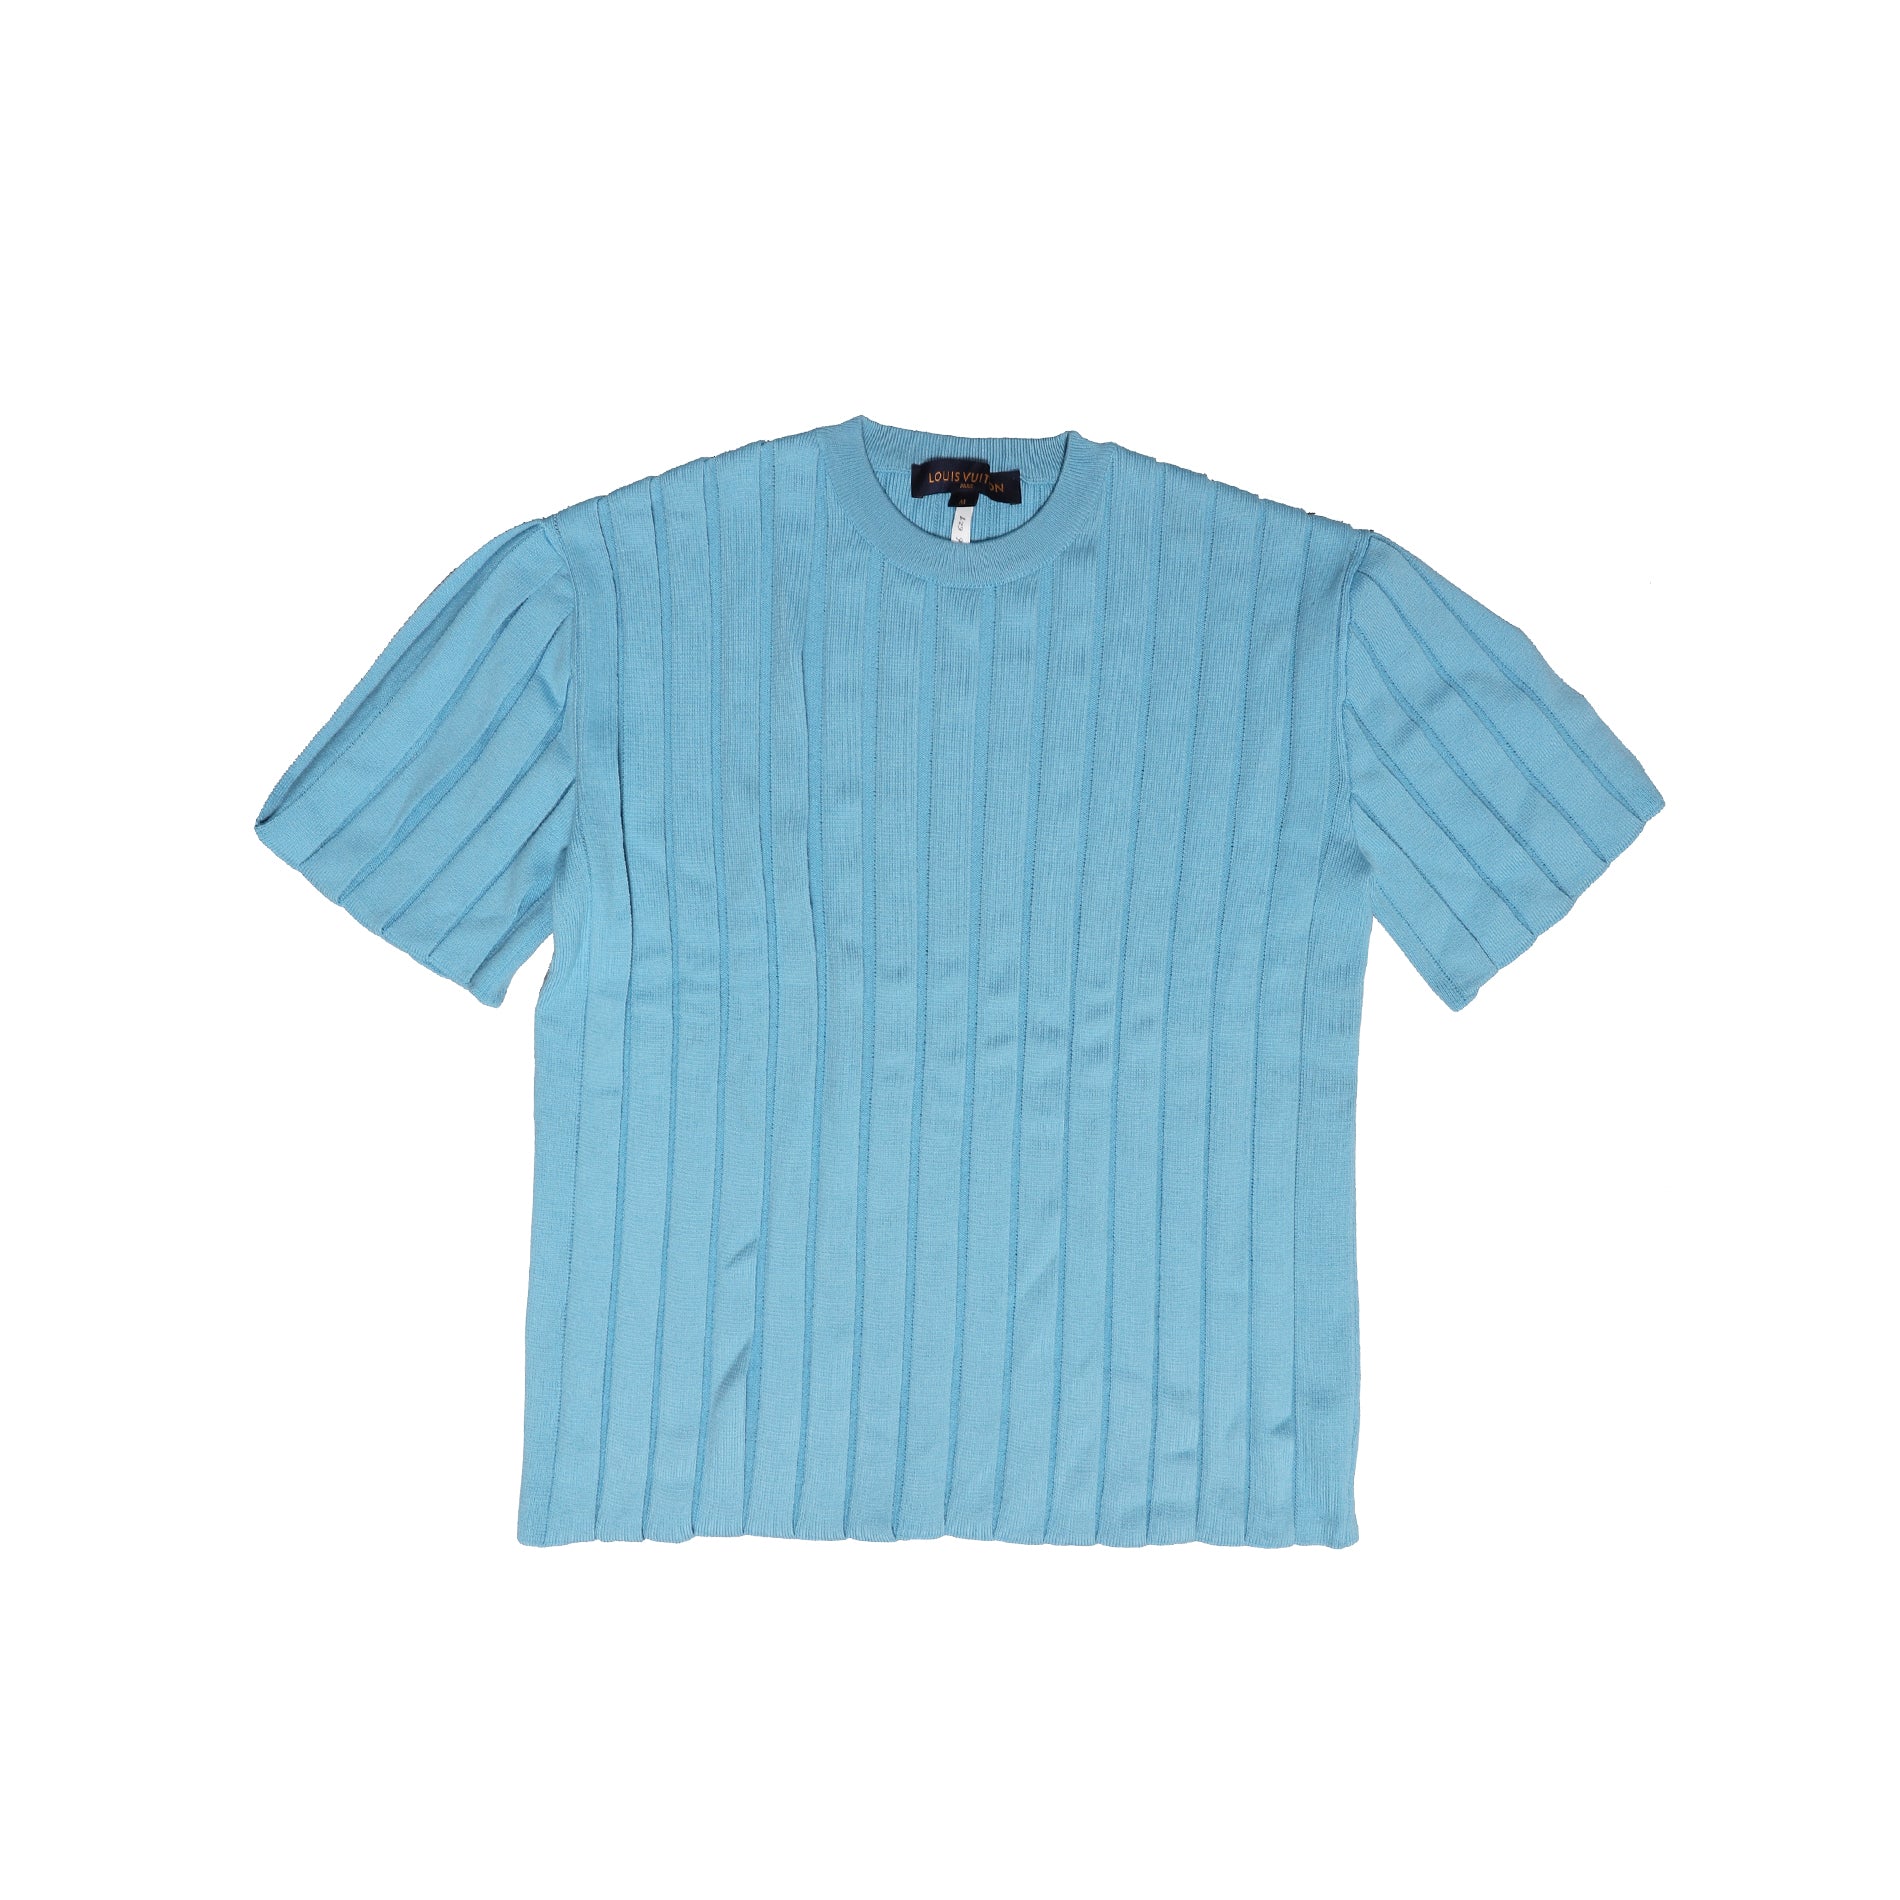 Louis Vuitton SS19 Staff T-Shirt - Ākaibu Store